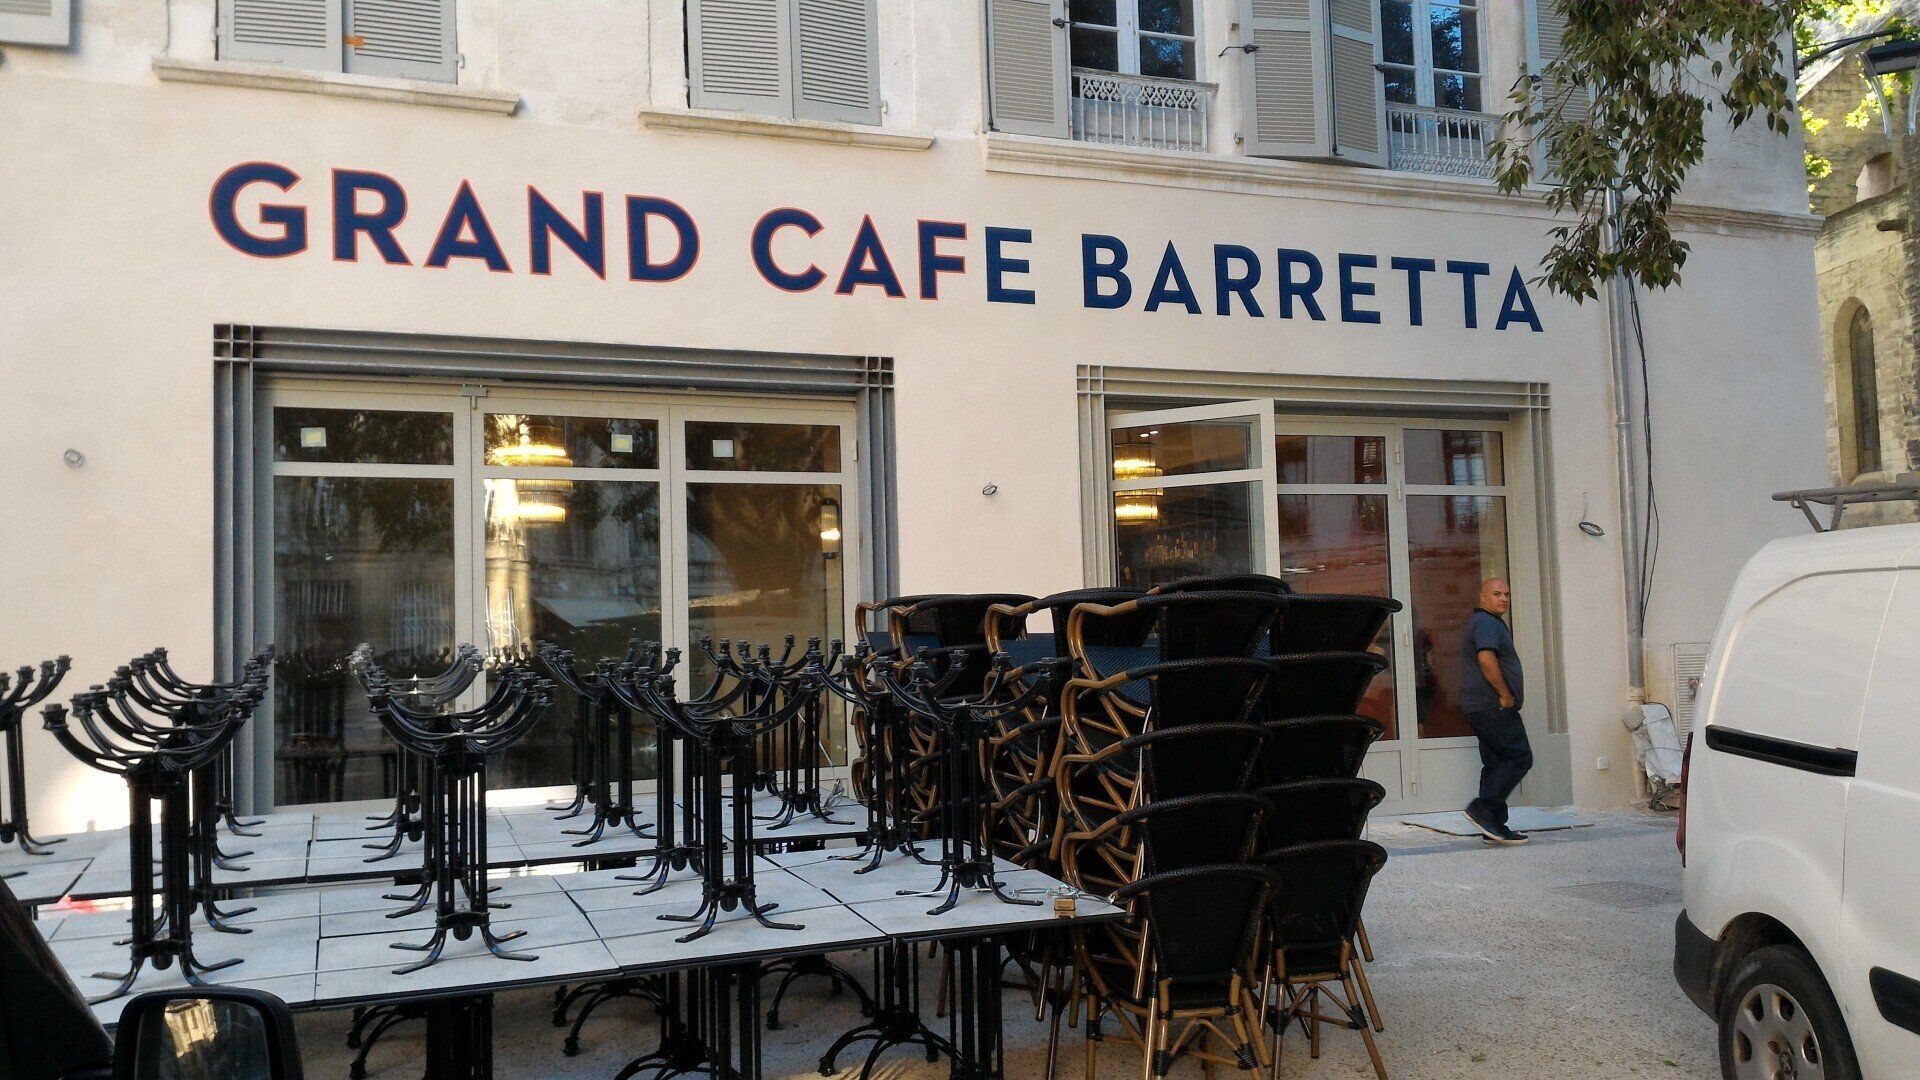 Lettres peintes : Grand Café Barretta